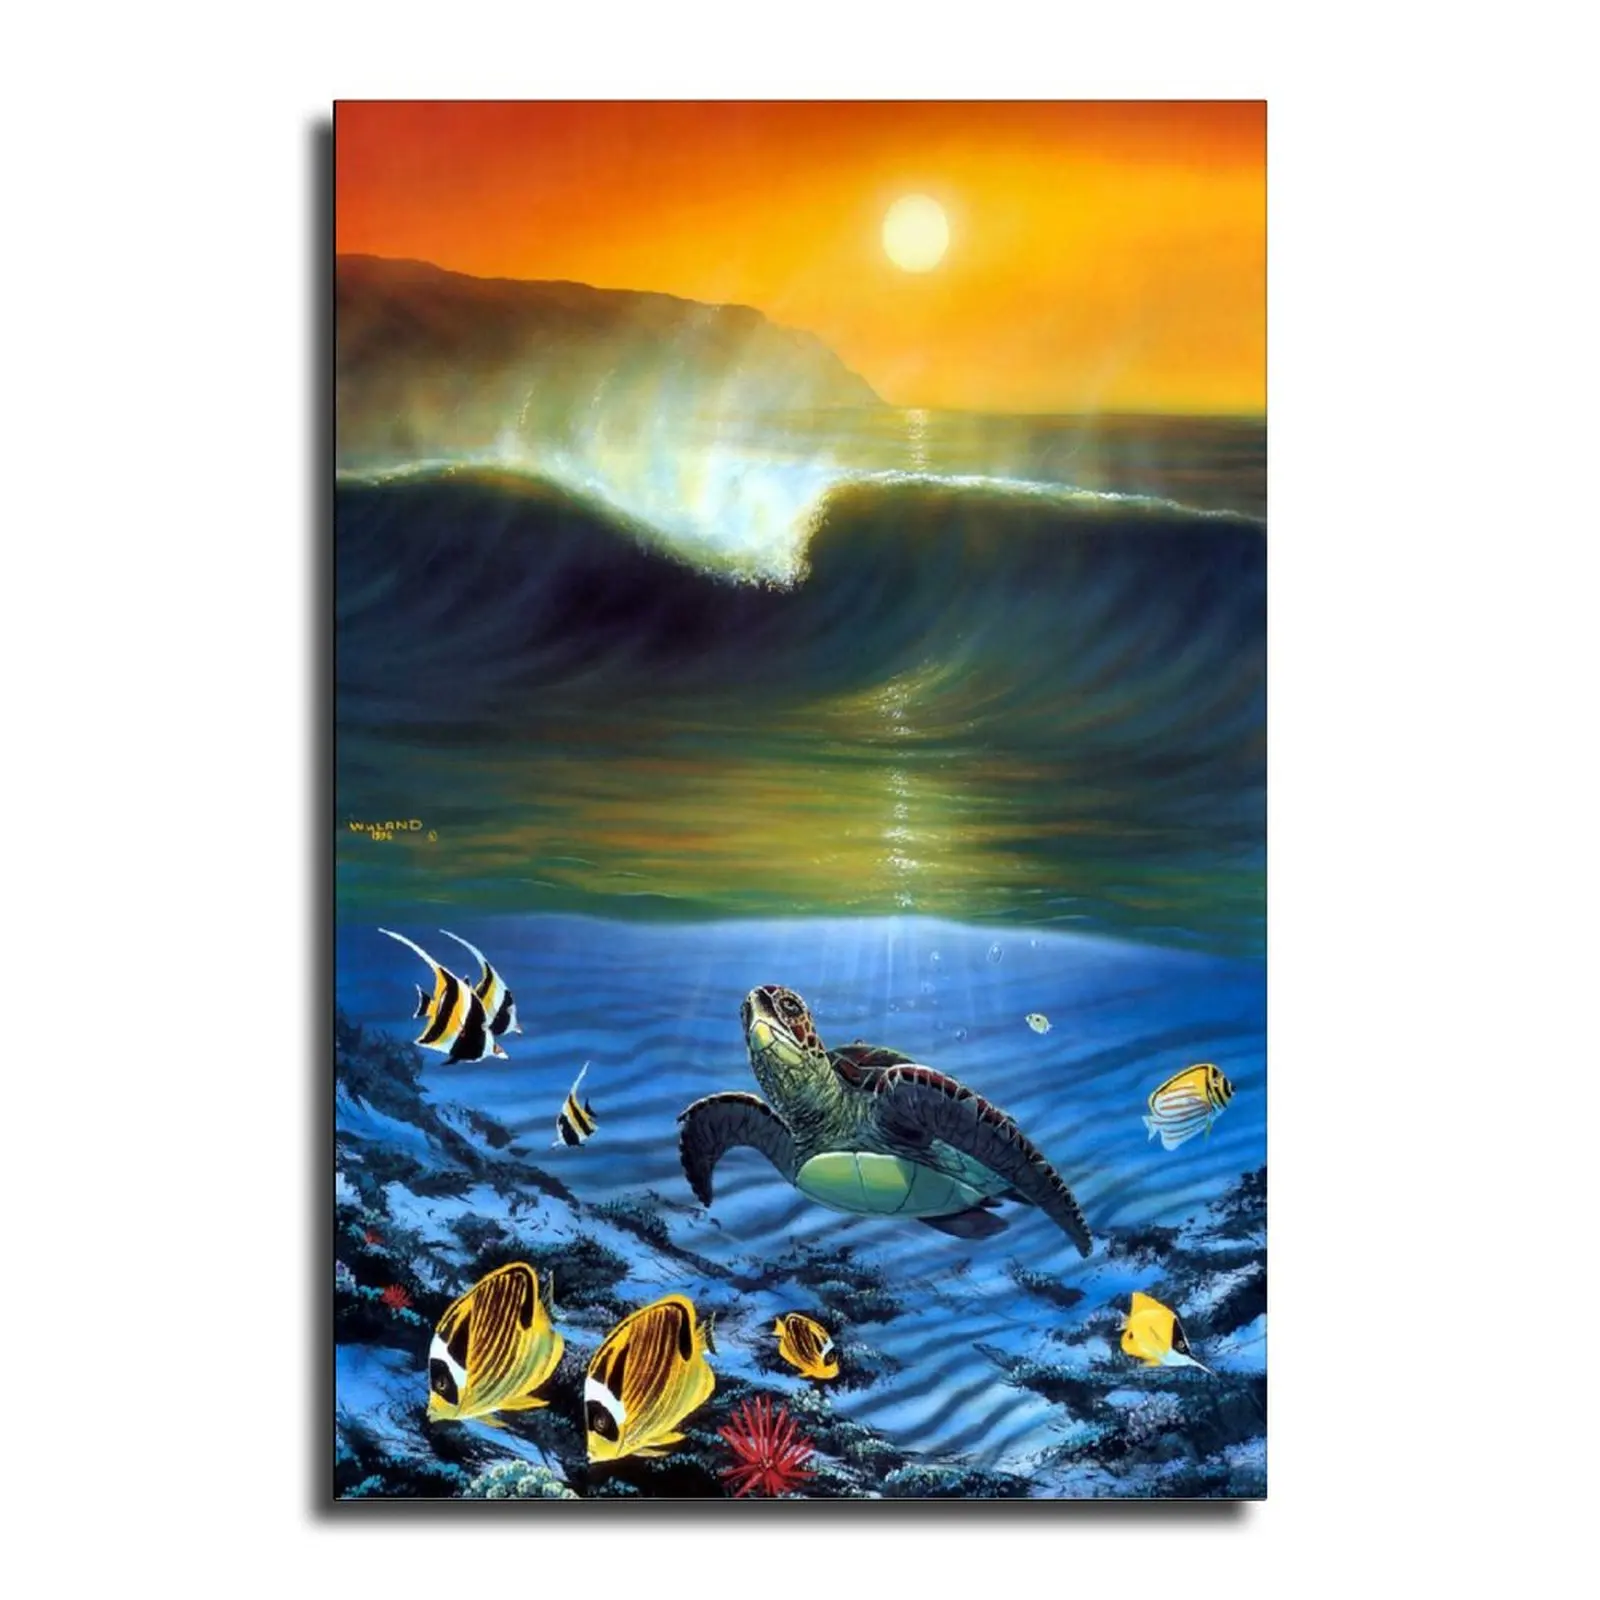 Art Painting Hd Print Robert Wyland North Shore Surf Room Decor on Canvas 16x20 